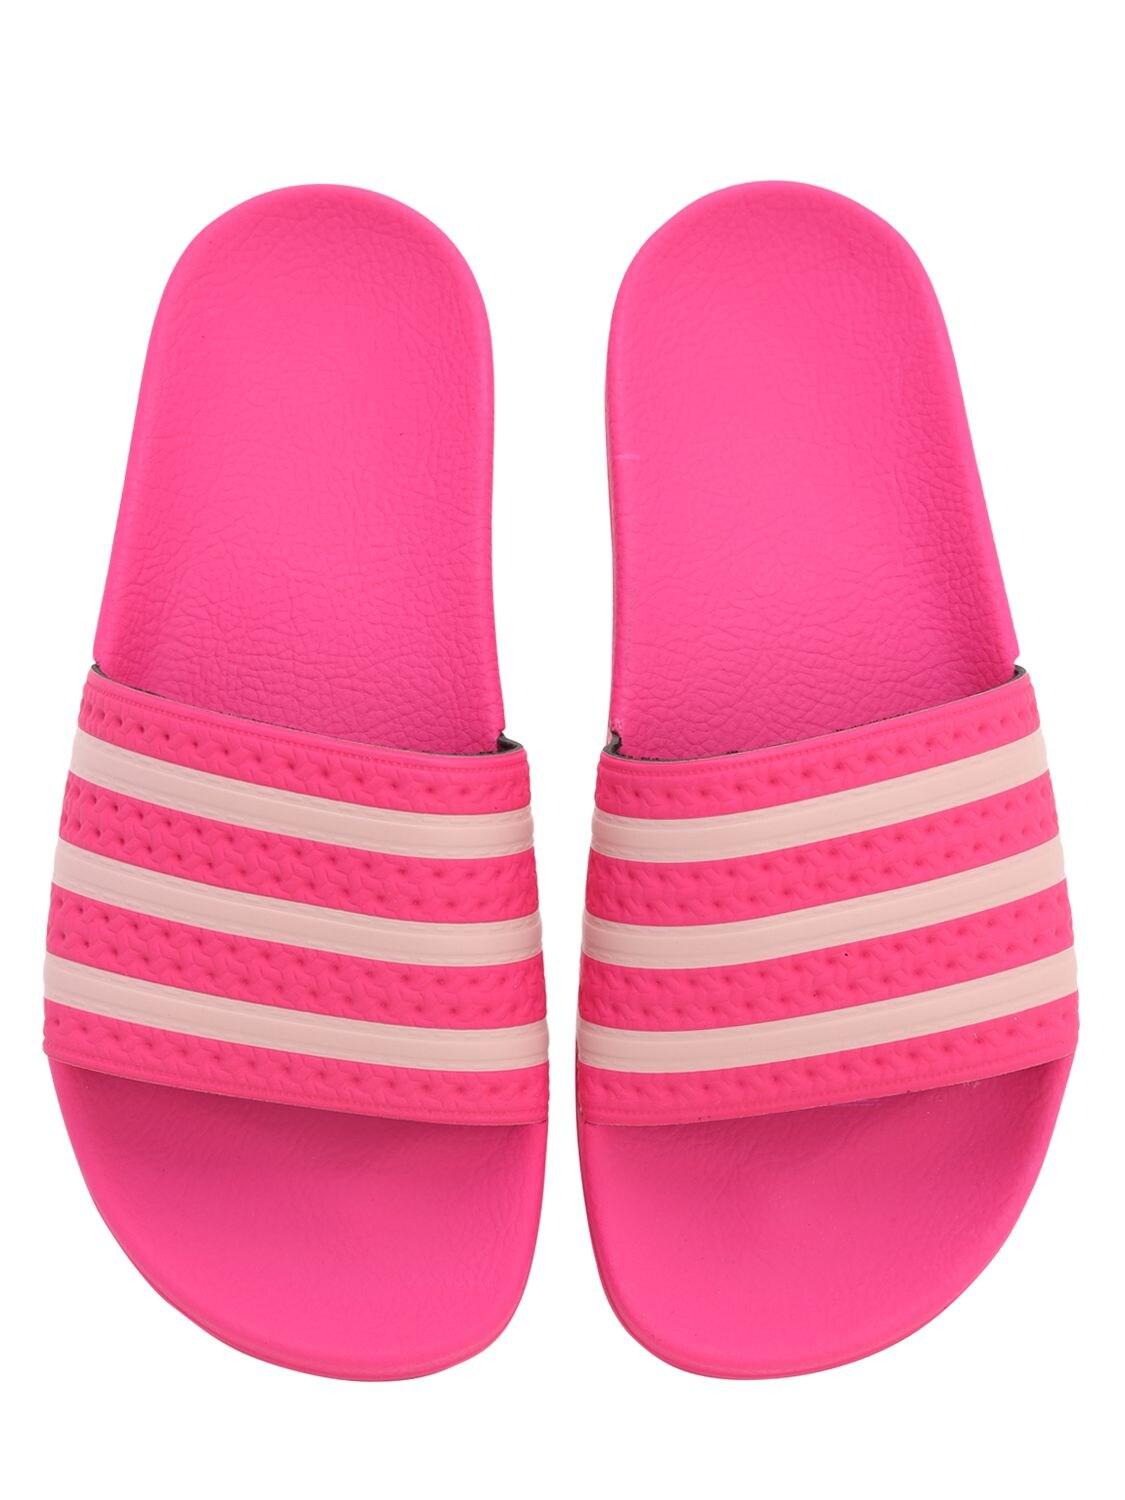 adidas Originals Adilette Slide Sandals in Fuchsia (Pink) | Lyst